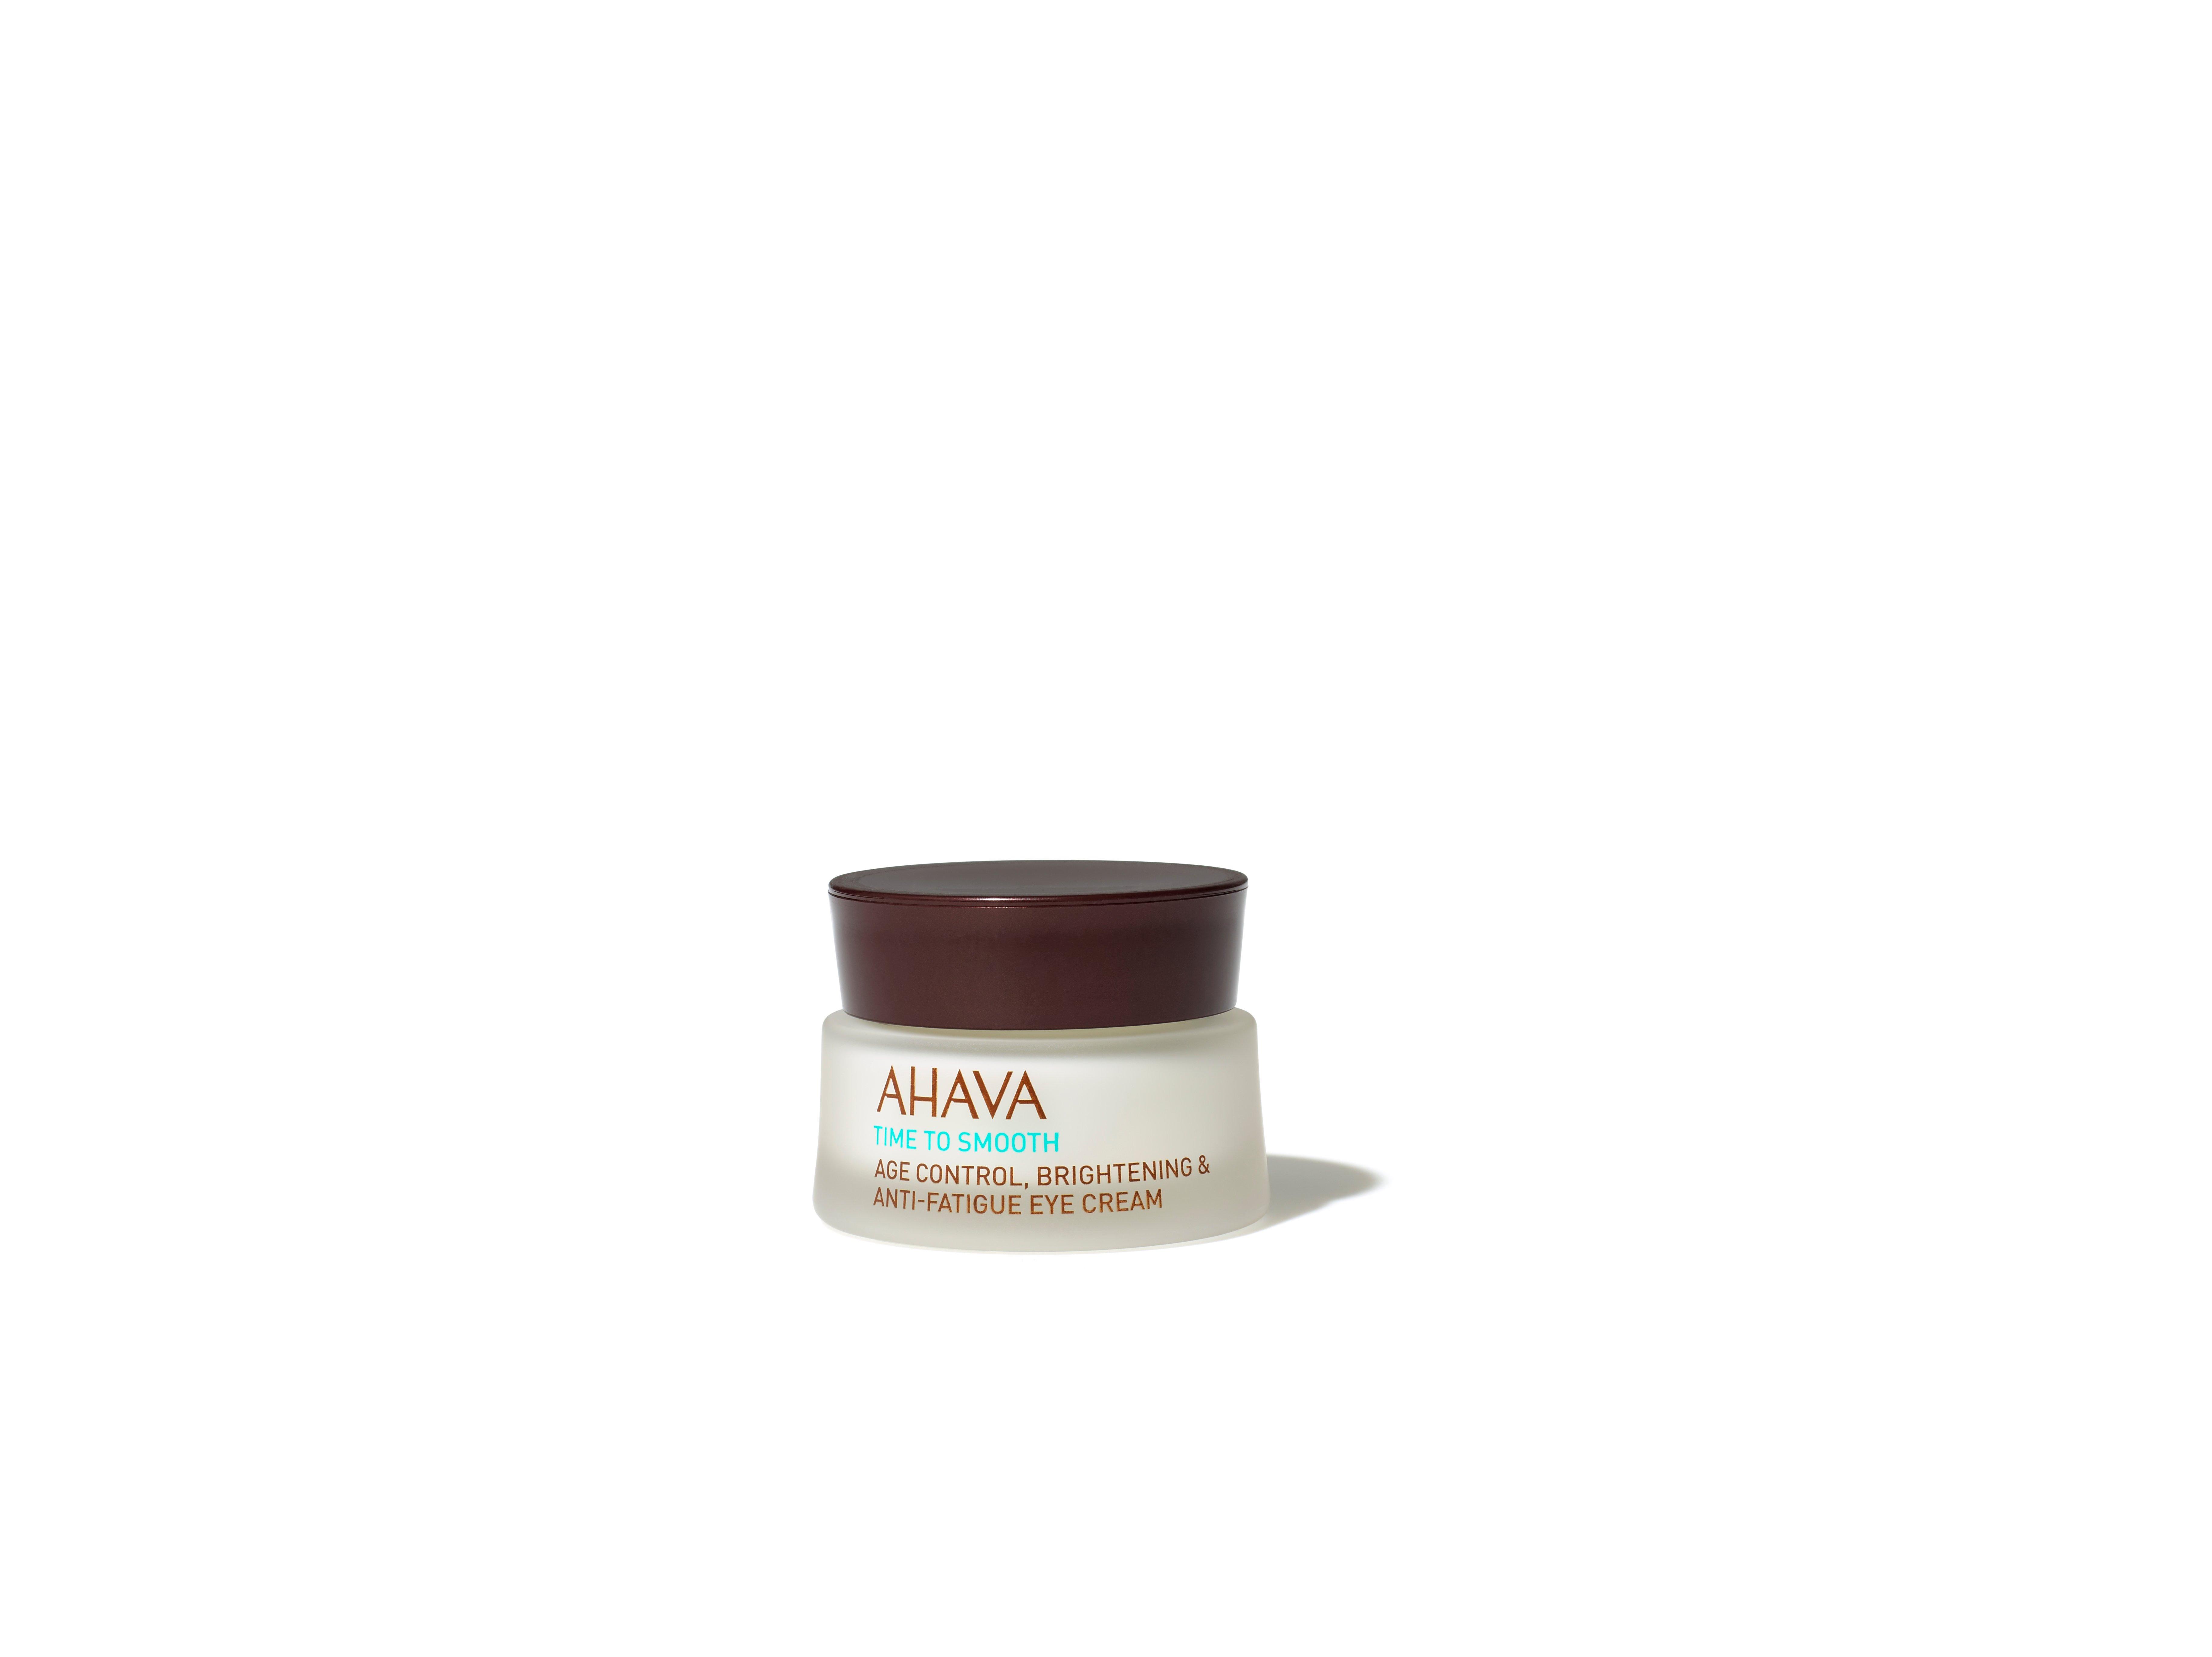 Image of AHAVA Age Control Brightening & Anti-fatigue Eye Cream - 15ml